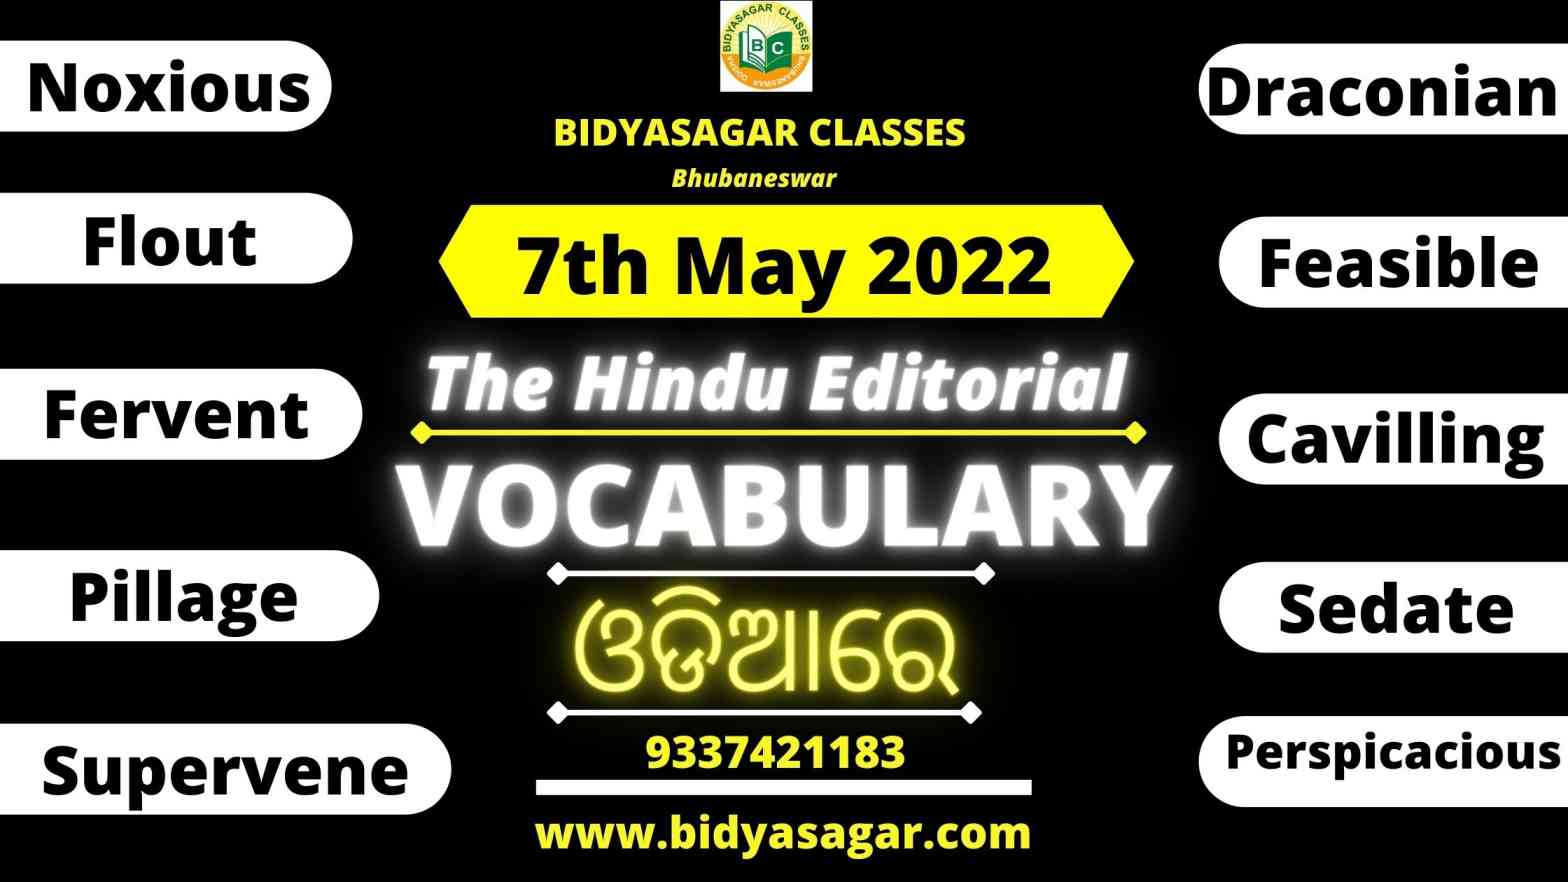 The Hindu Editorial Vocabulary of 7th May 2022